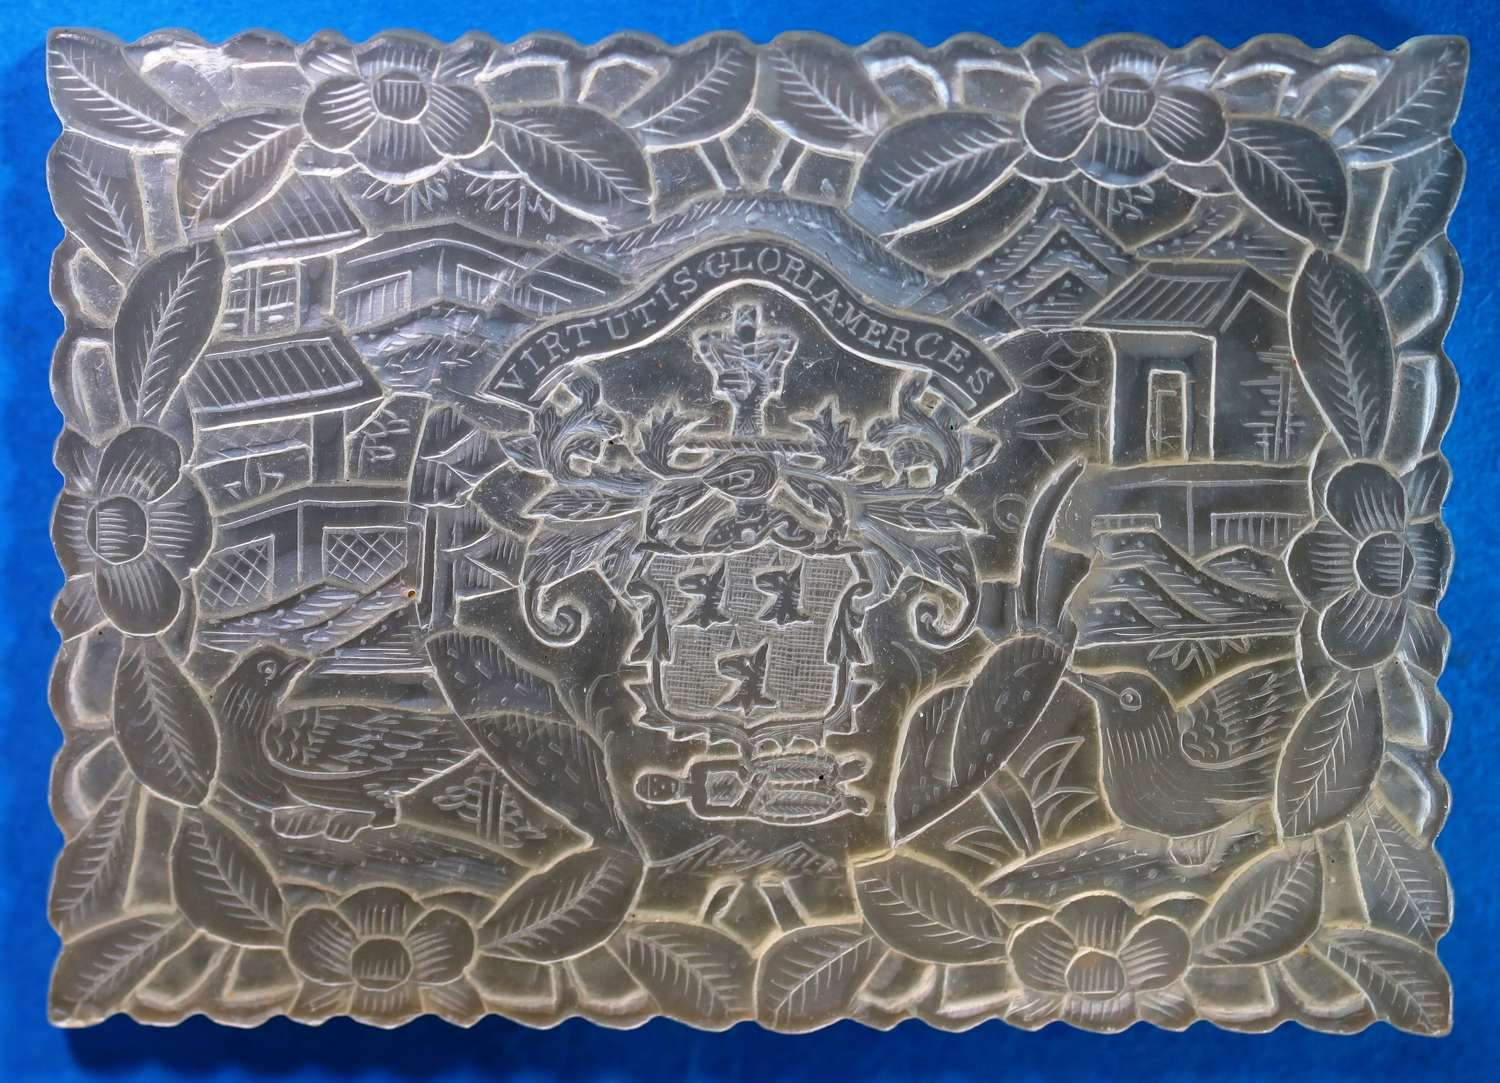 Superb deep-carved for ROBERTSON - interesting heraldry!